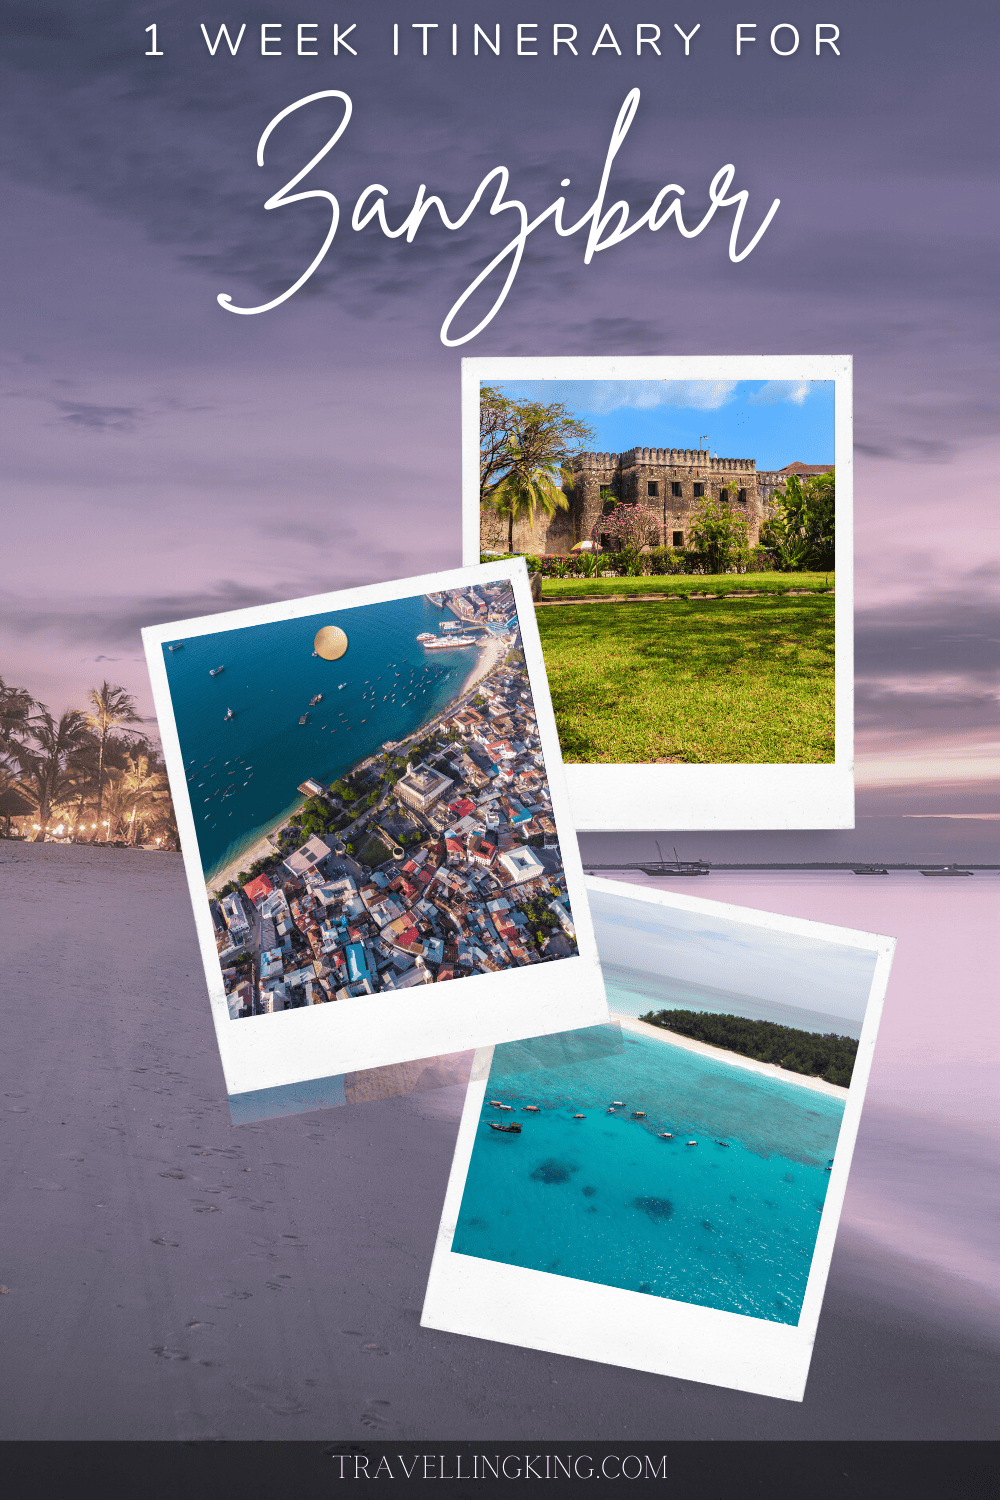 1 week itinerary for Zanzibar